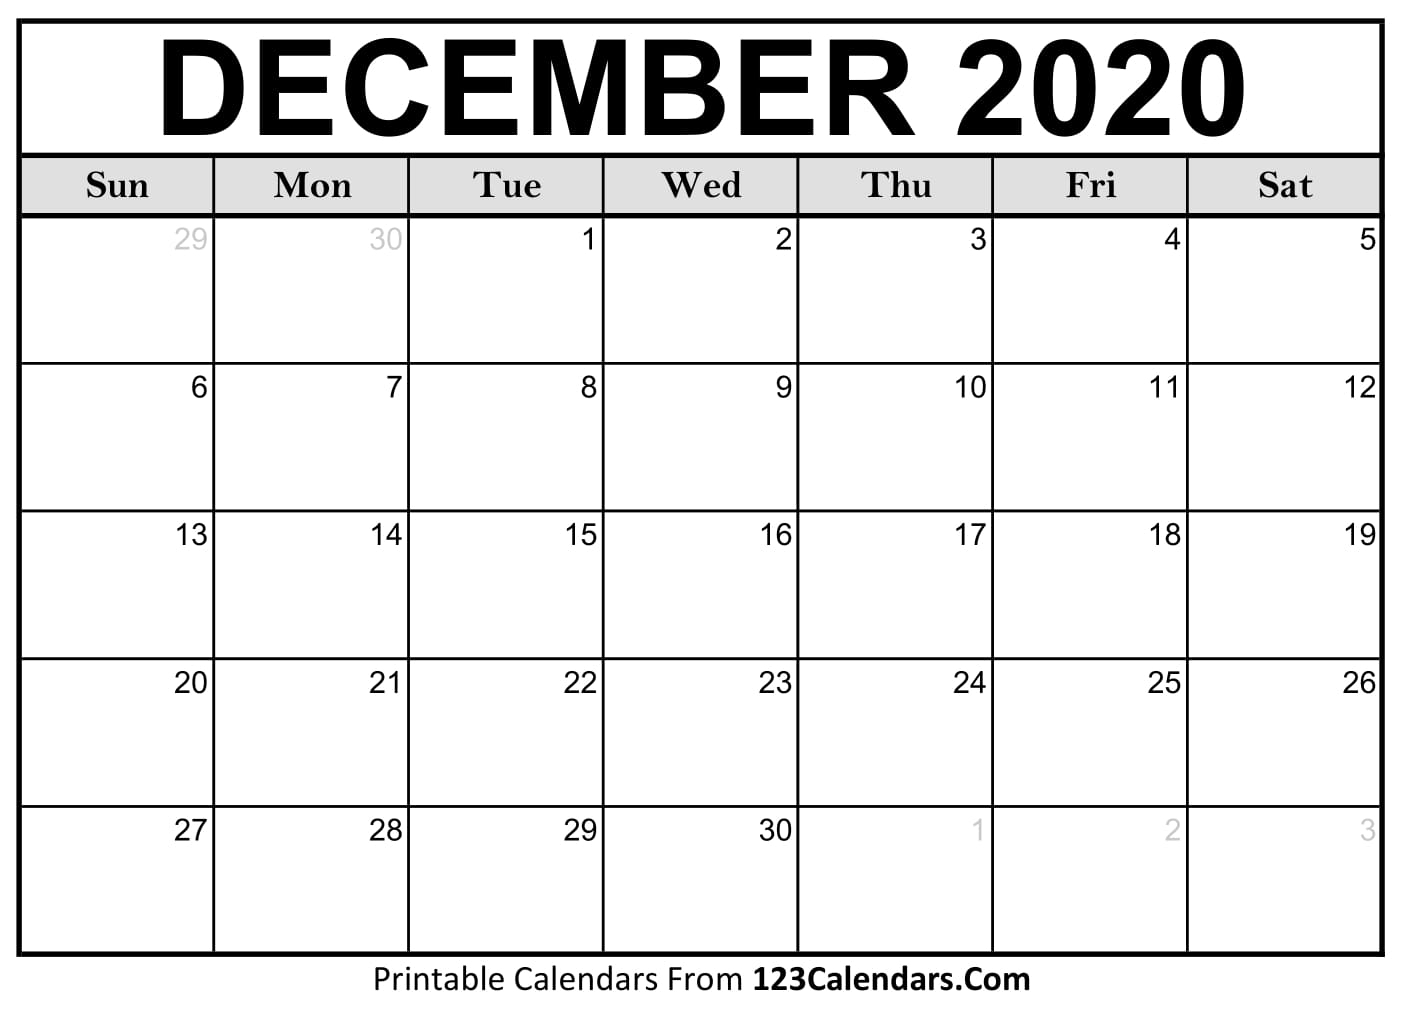 December 2020 Printable Calendar | 123Calendars